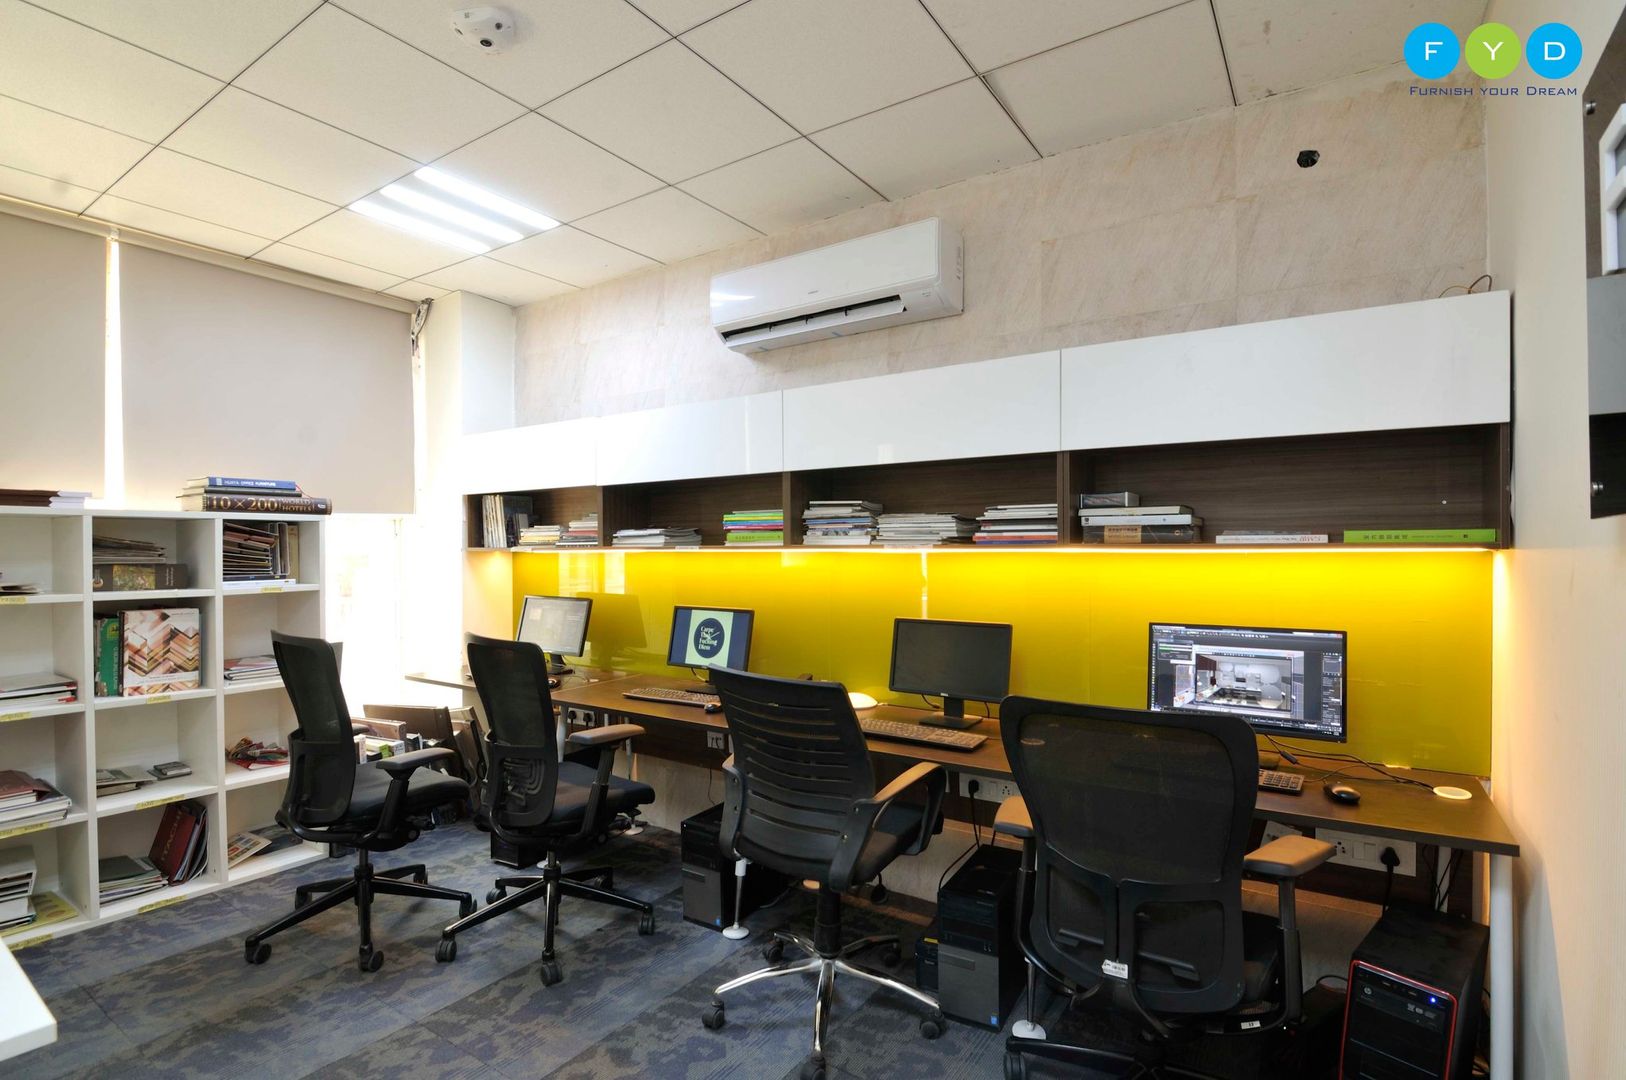 Let's Work - Coworking Space in Noida FYD Interiors Pvt. Ltd Commercial spaces interior design,office,coworking,office interiors,Office buildings